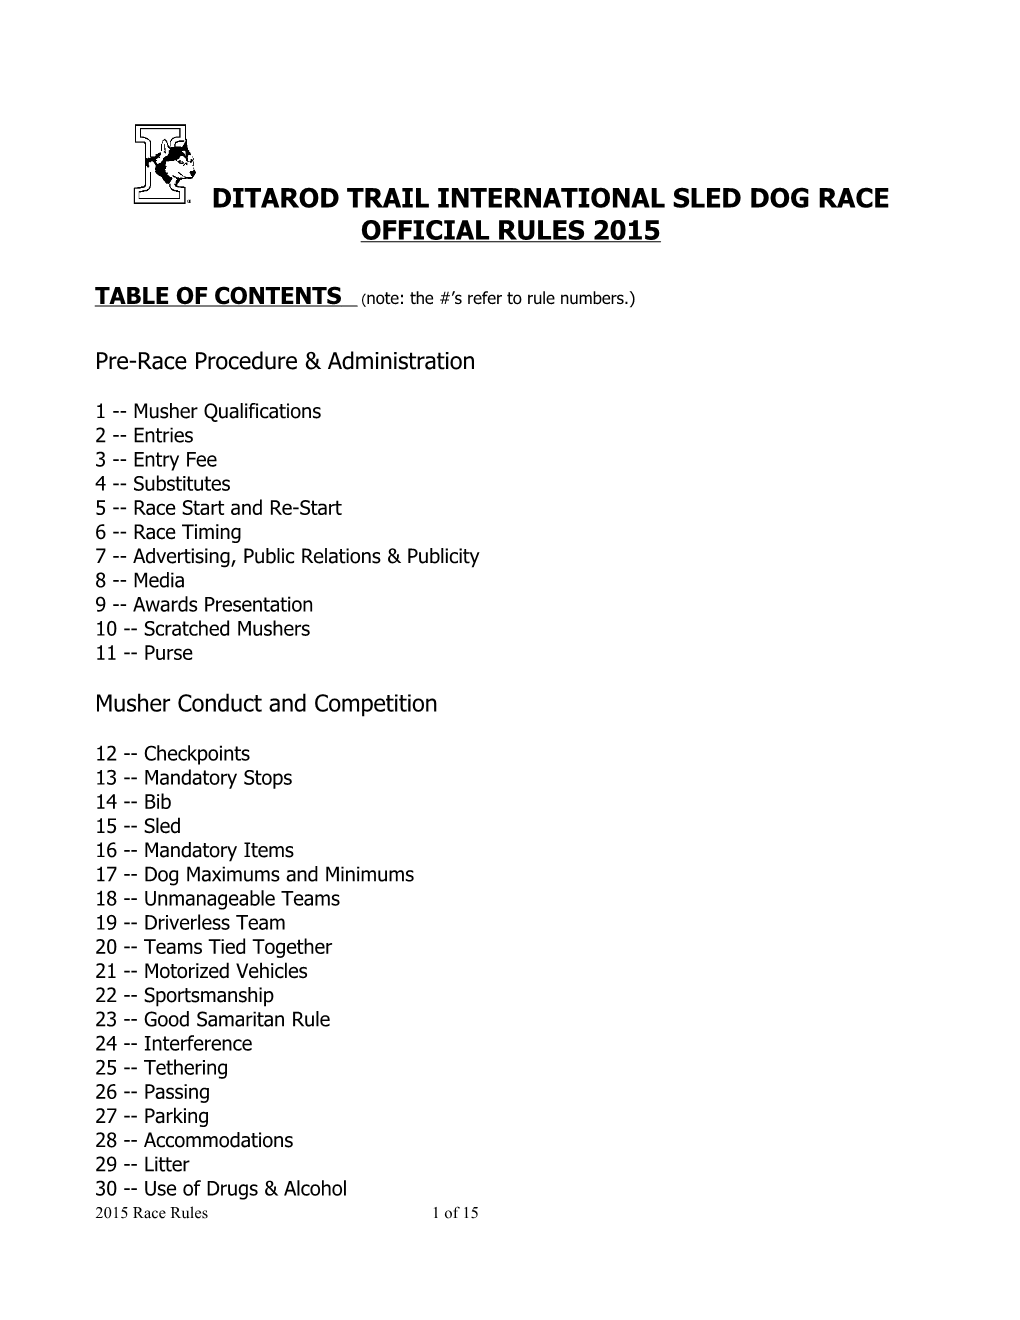 Ditarod Trail International Sled Dog Race